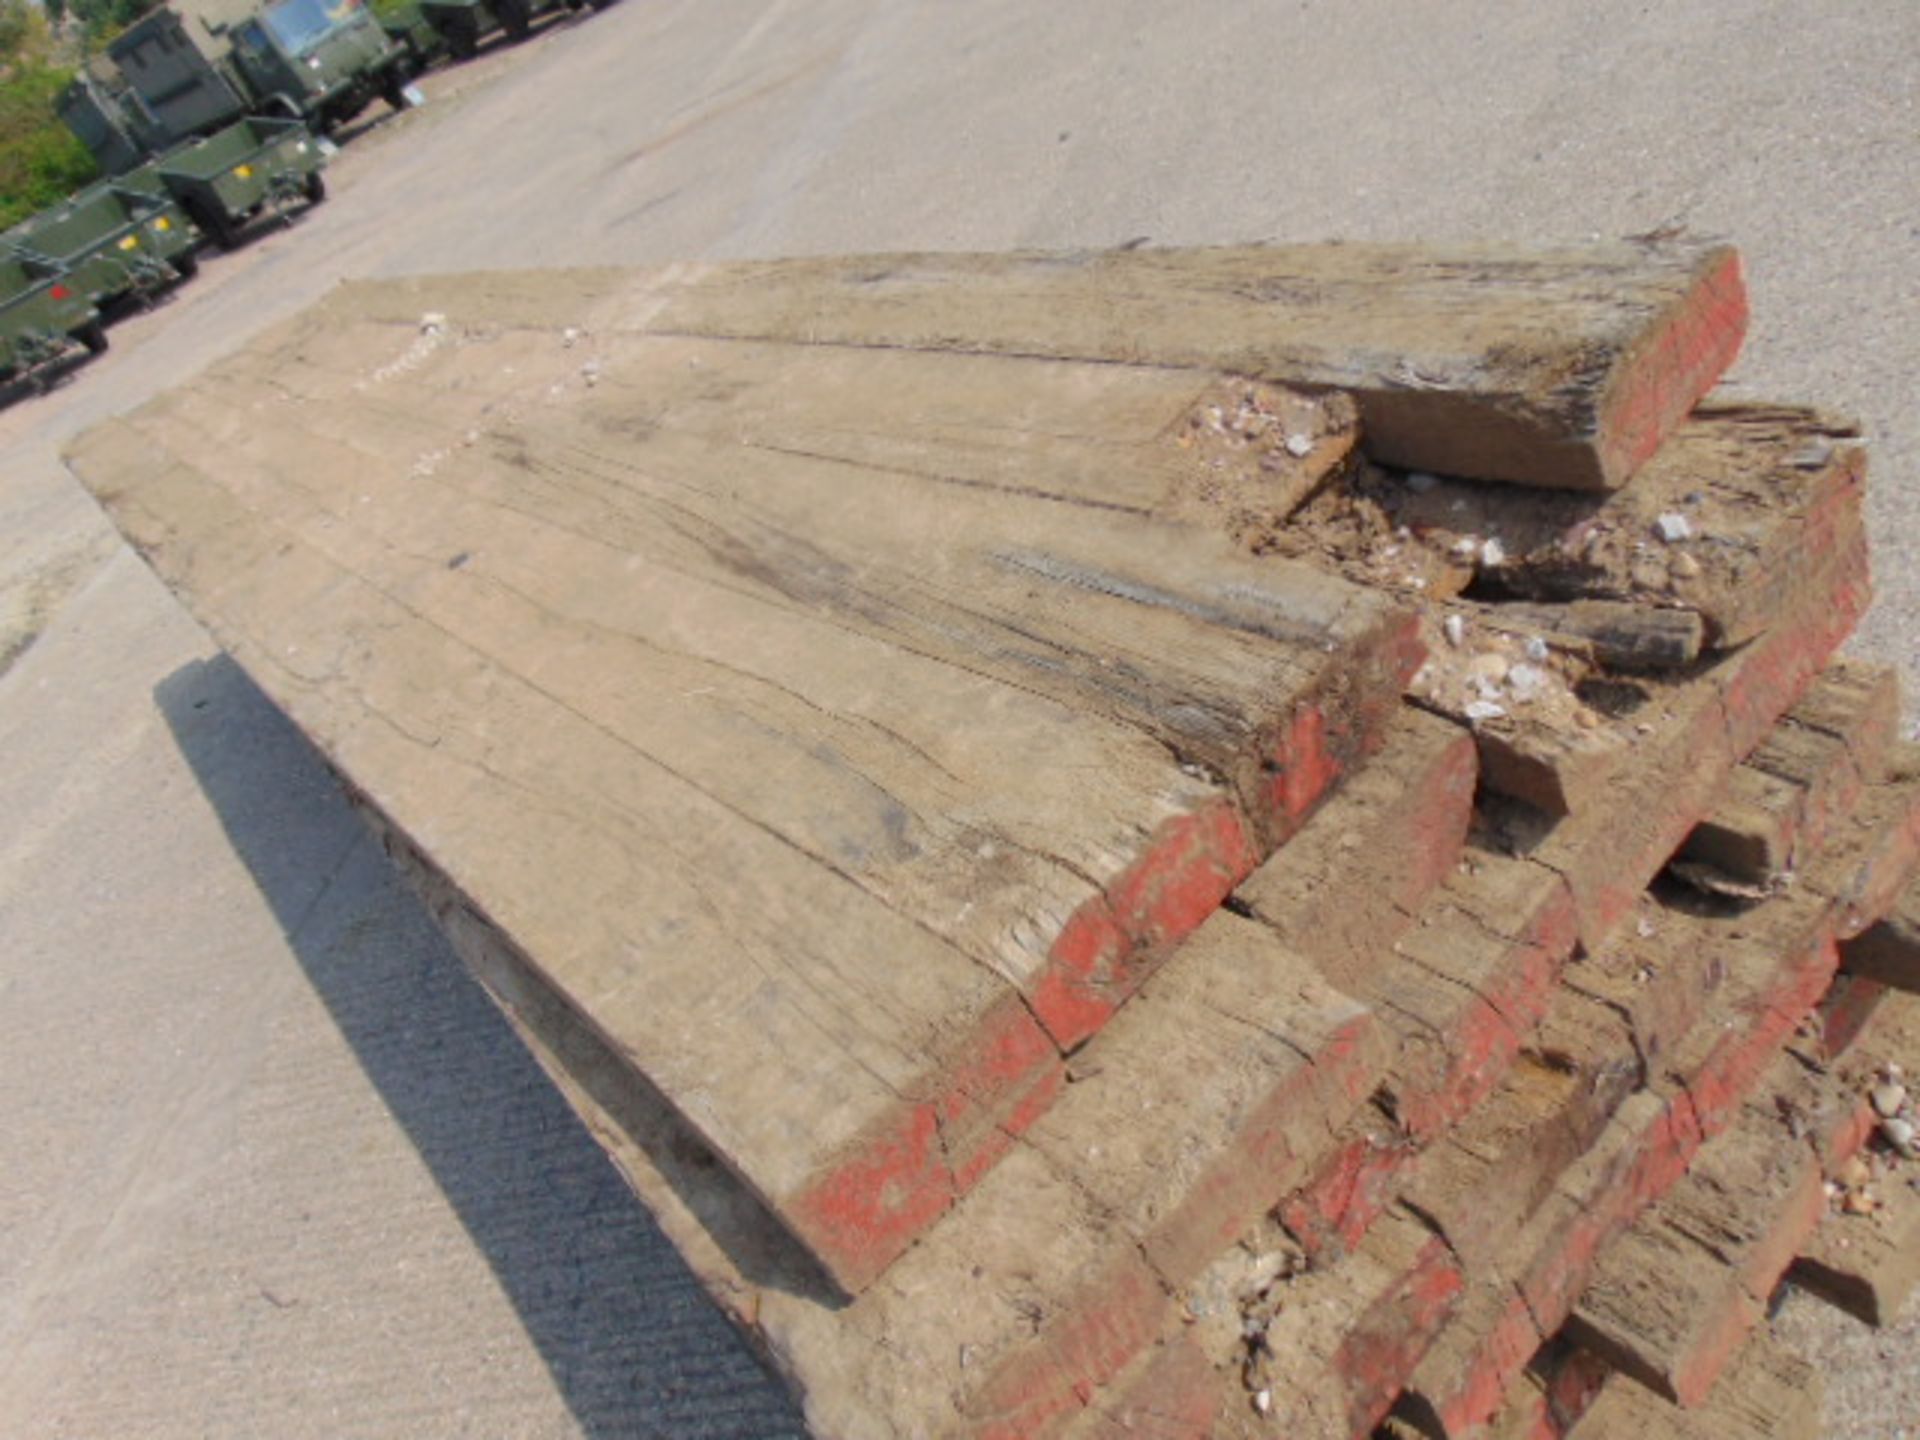 8 x 5m Hardwood Bog Mats for Excavators / Diggers etc - Image 5 of 7